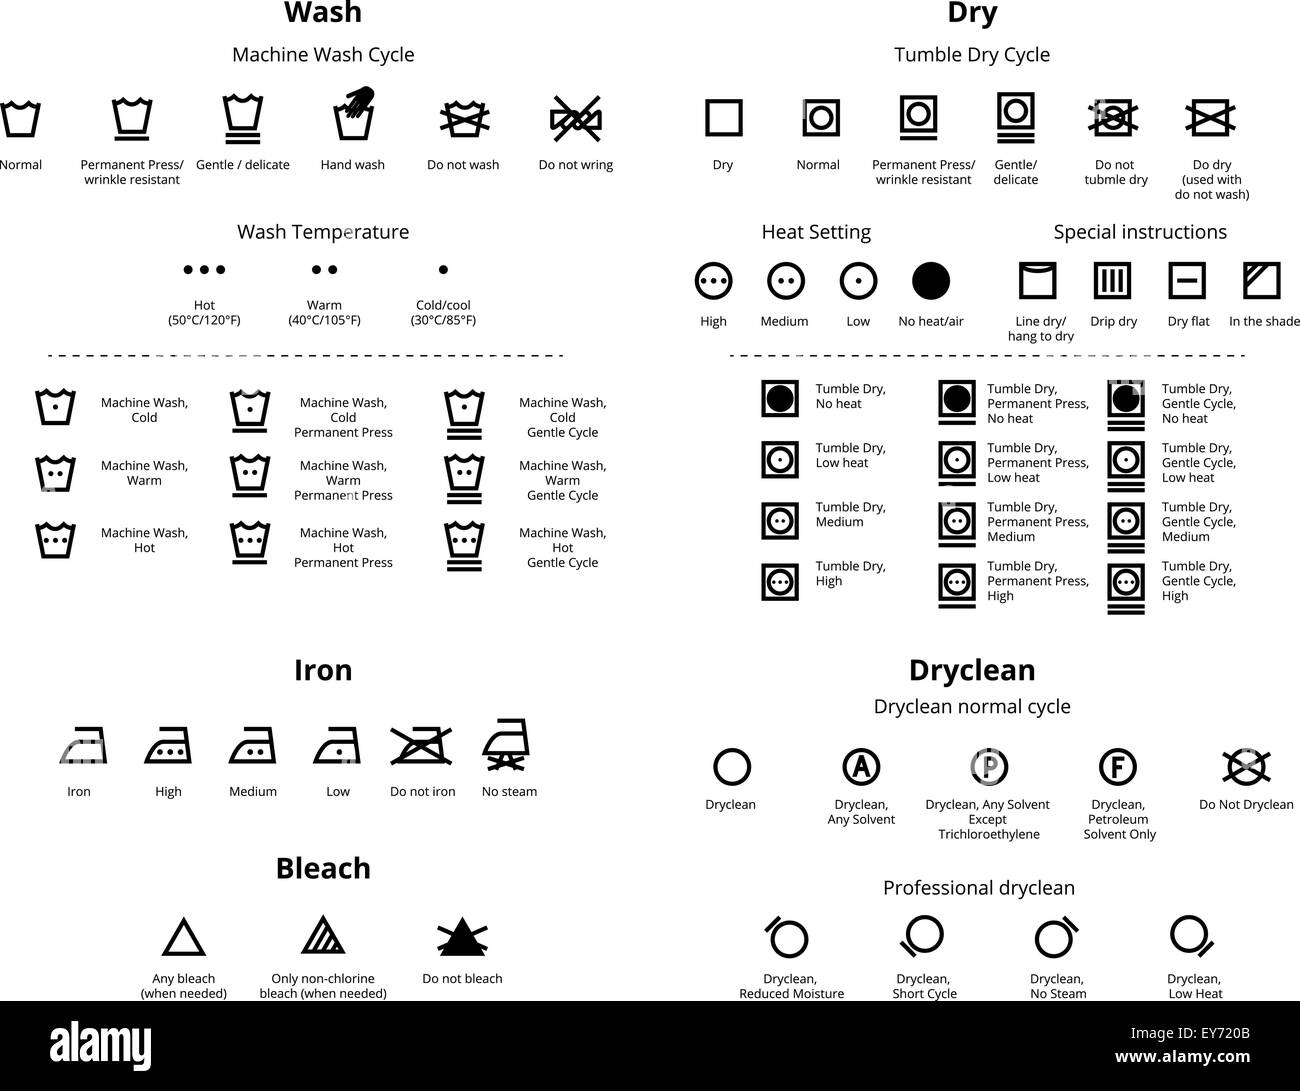 Tumble Dryer Wash Care Symbols Explained - Herne Bay Domestics Ltd